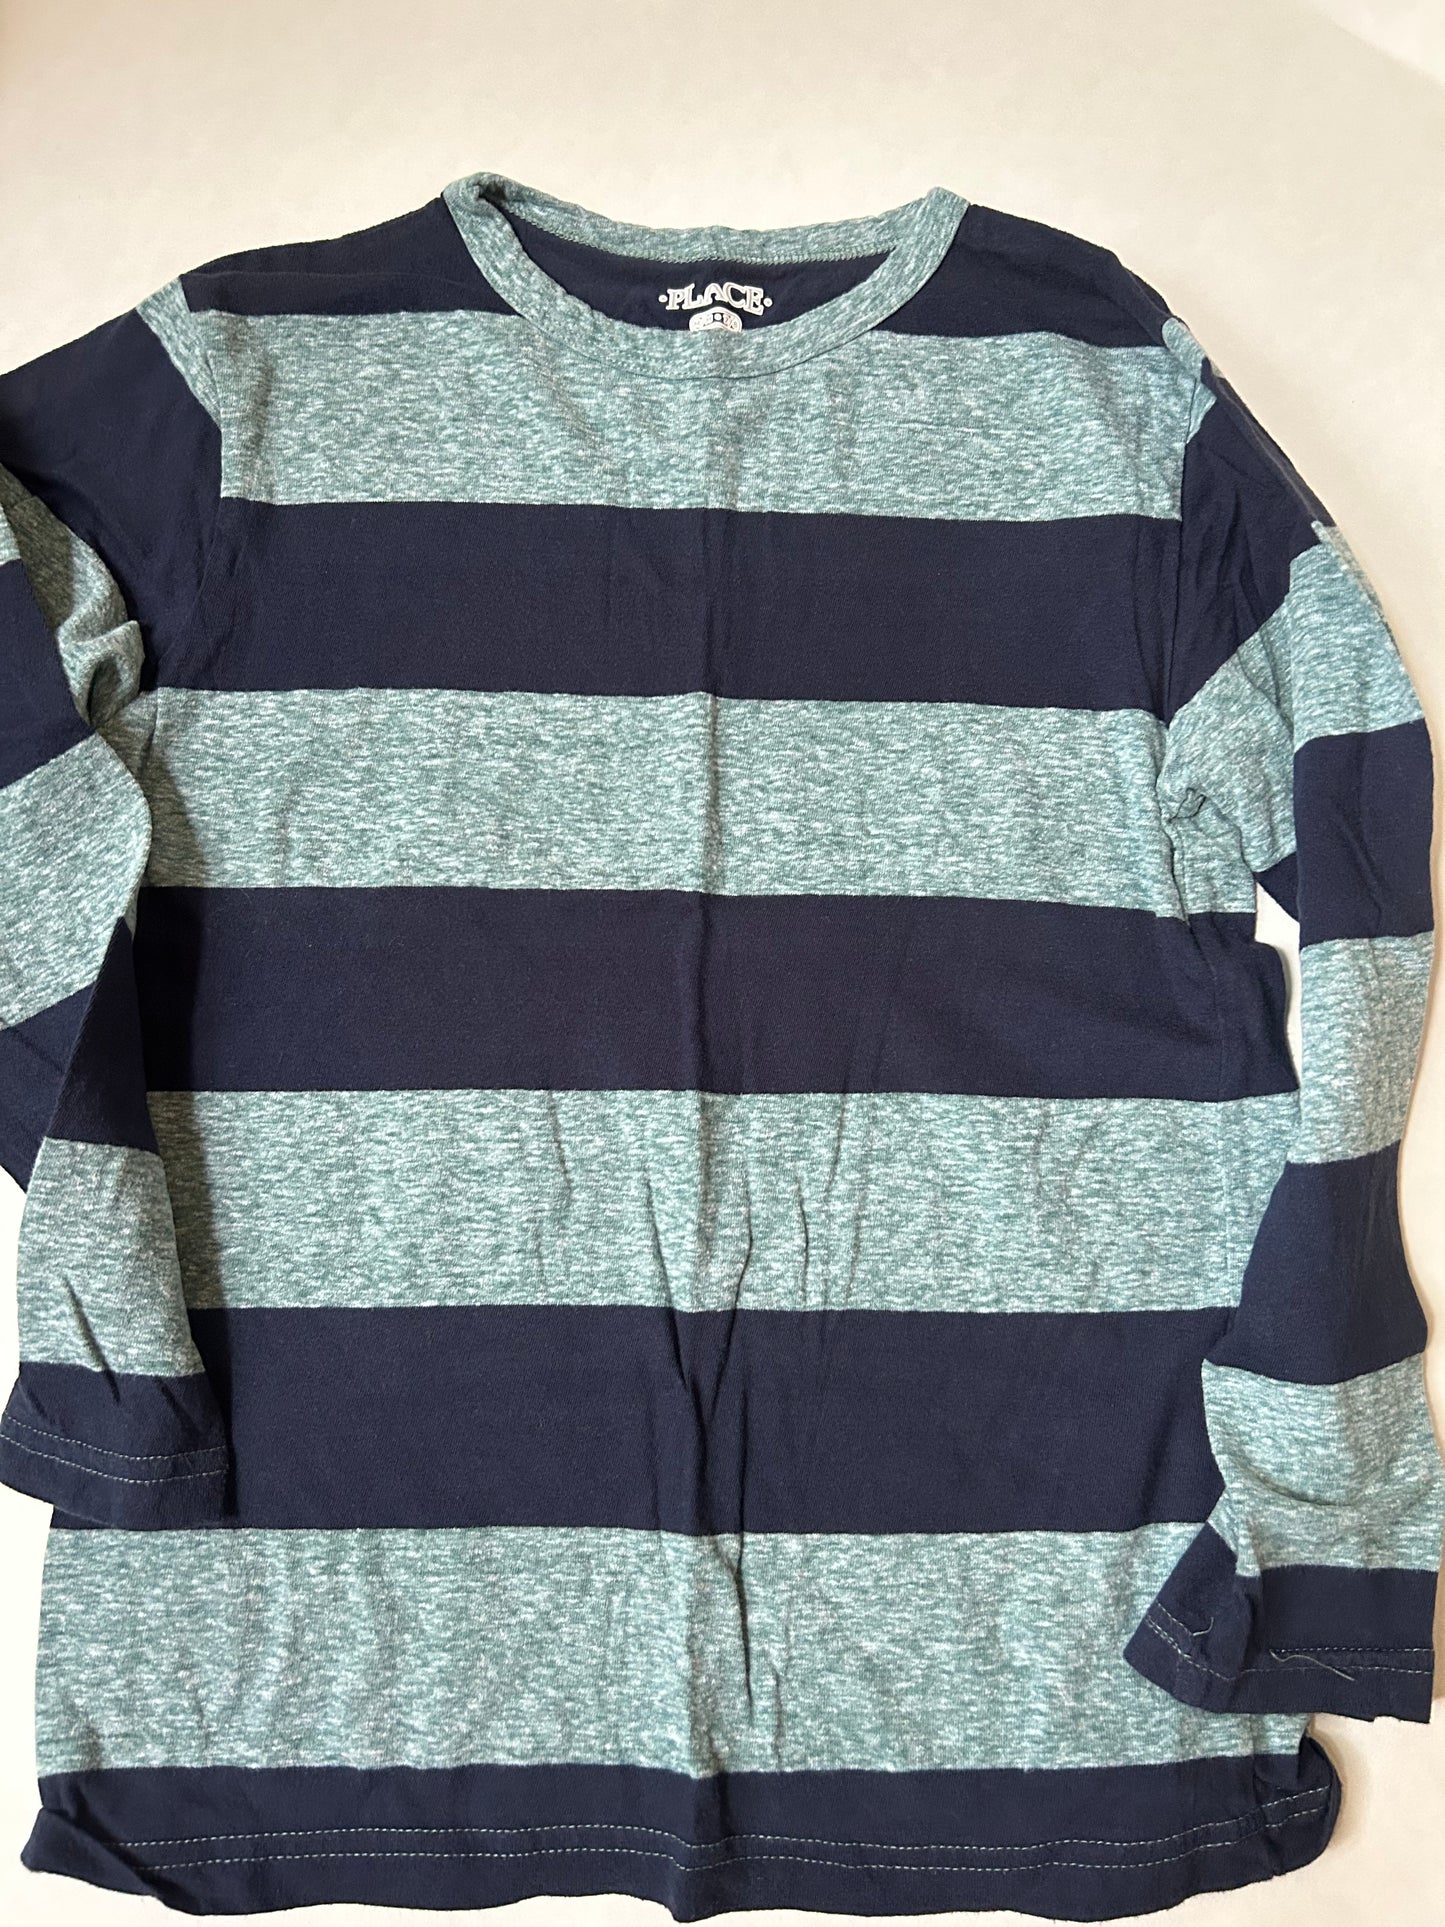 Boys Youth Medium 7-8 Children's Place green/navy striped long sleeve shirt